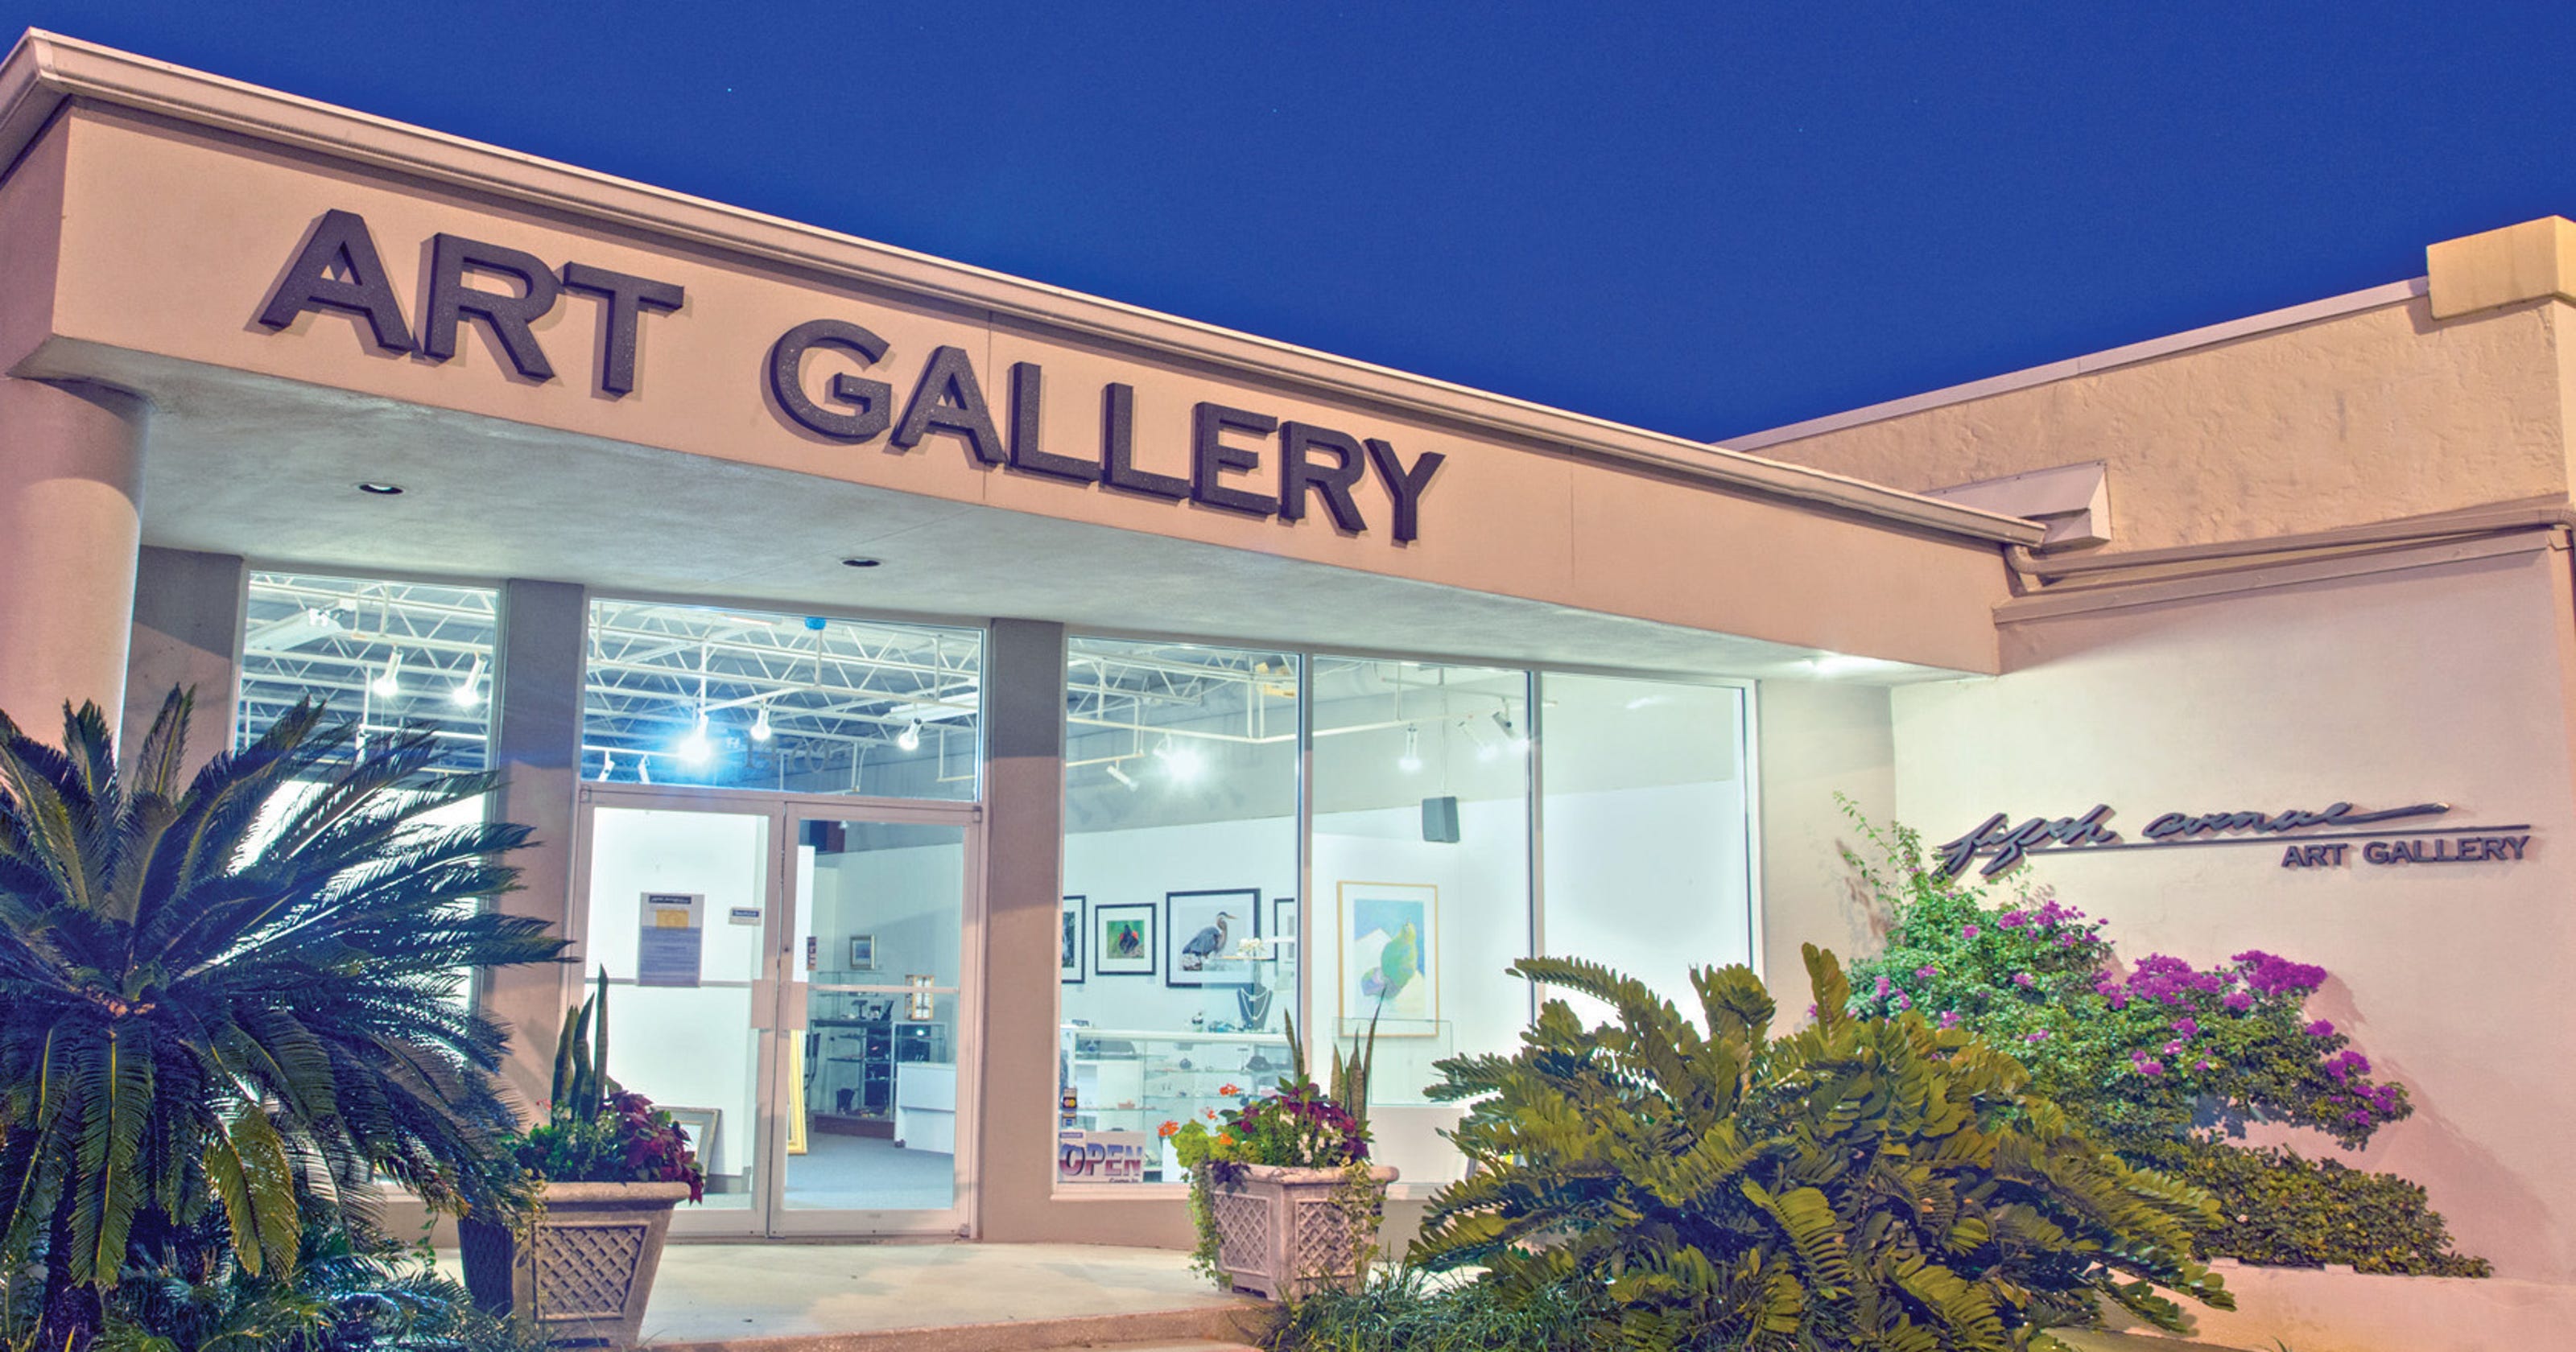 Fifth Avenue Art Gallery Turns 40